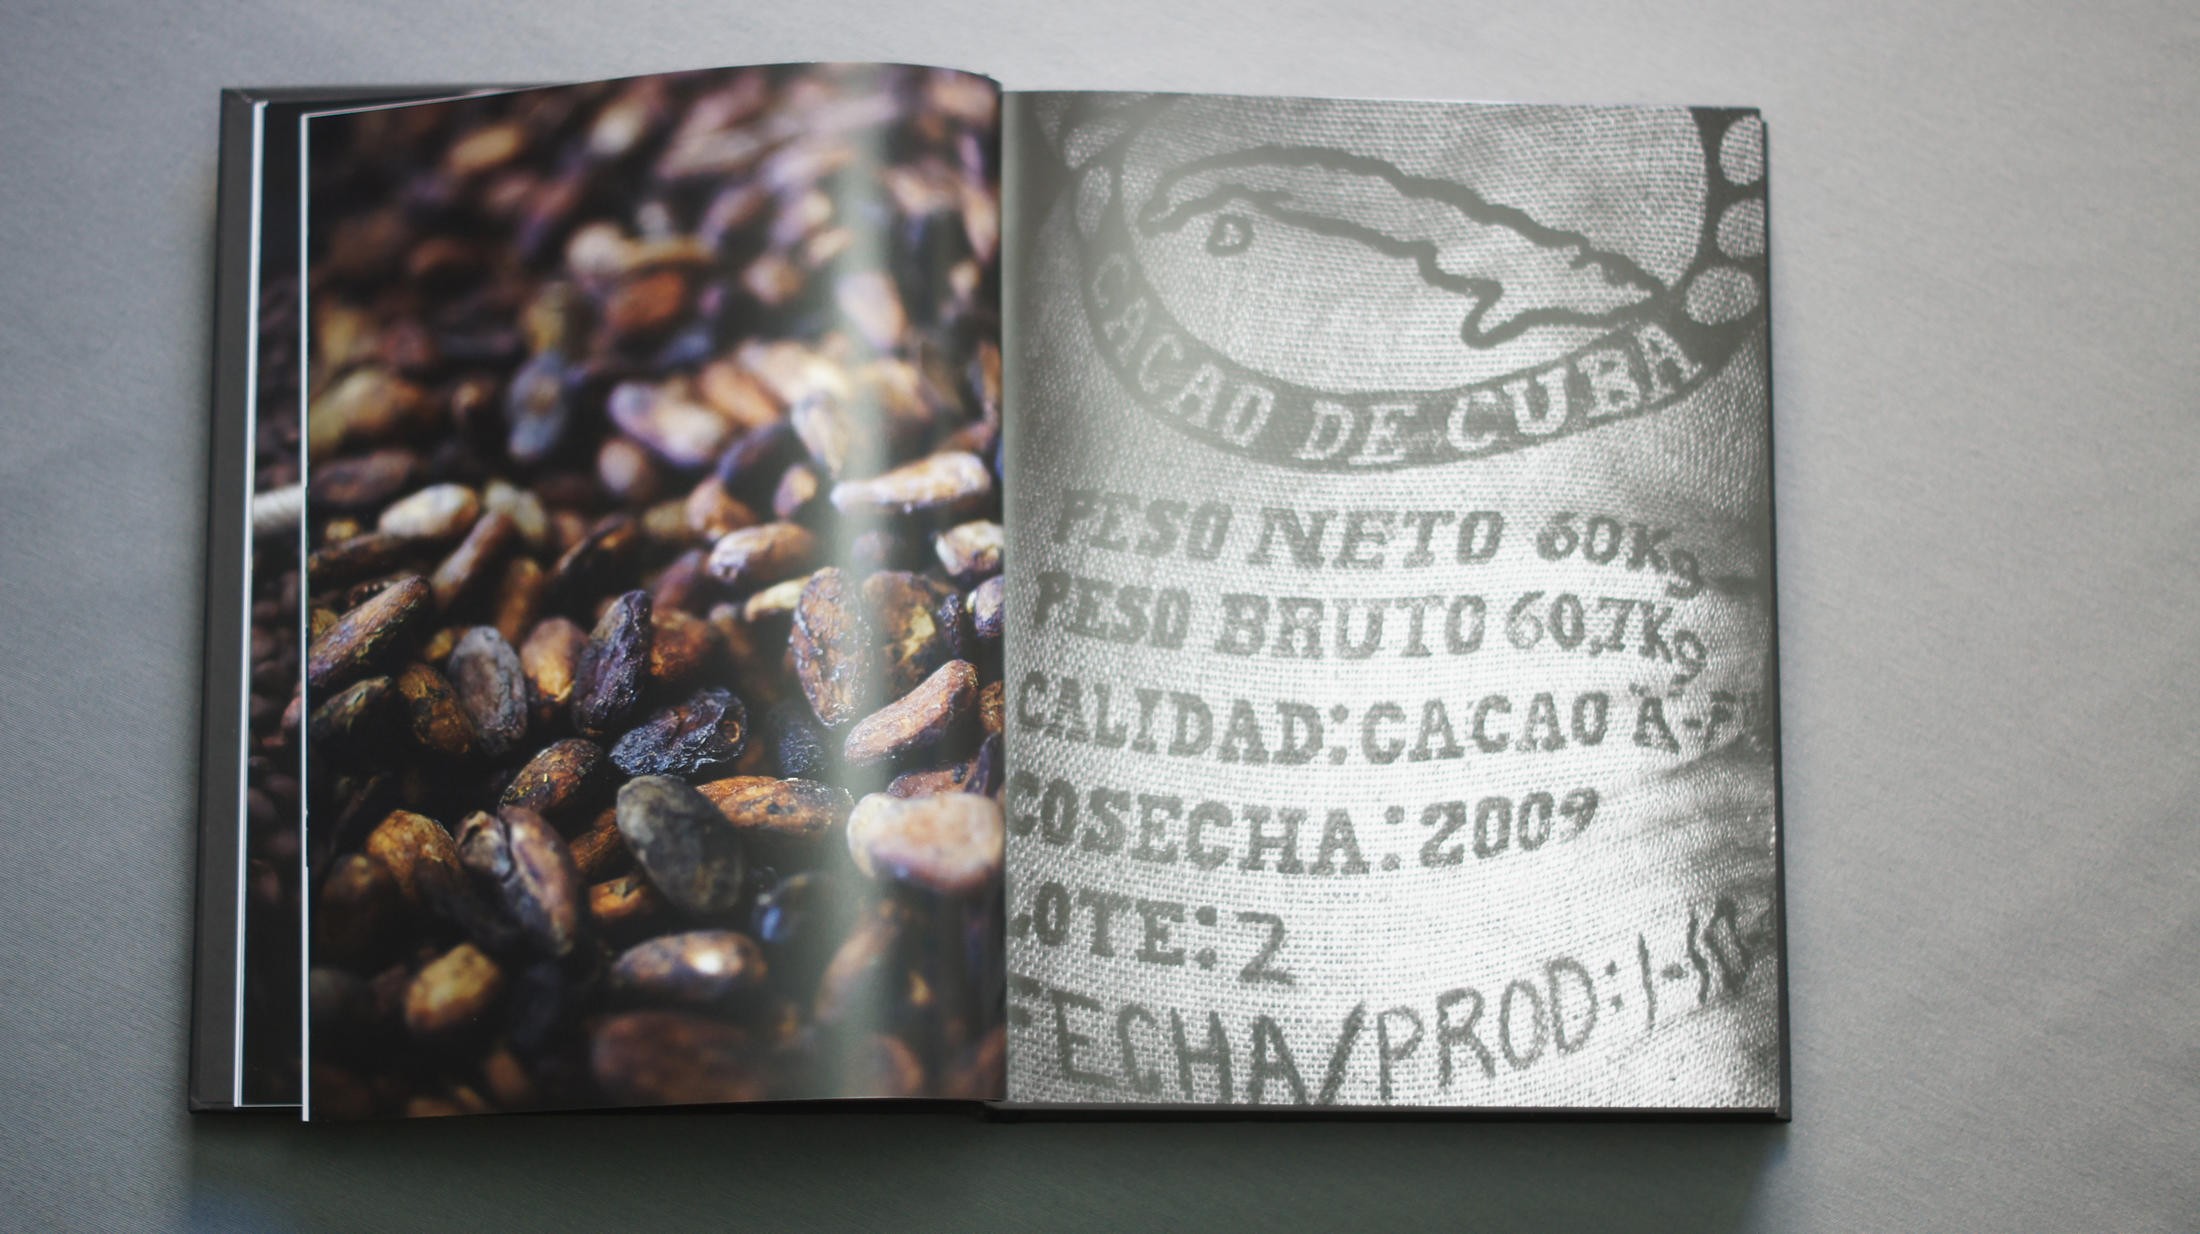 Cacao, del haba a la tableta de Pierre Marcolini